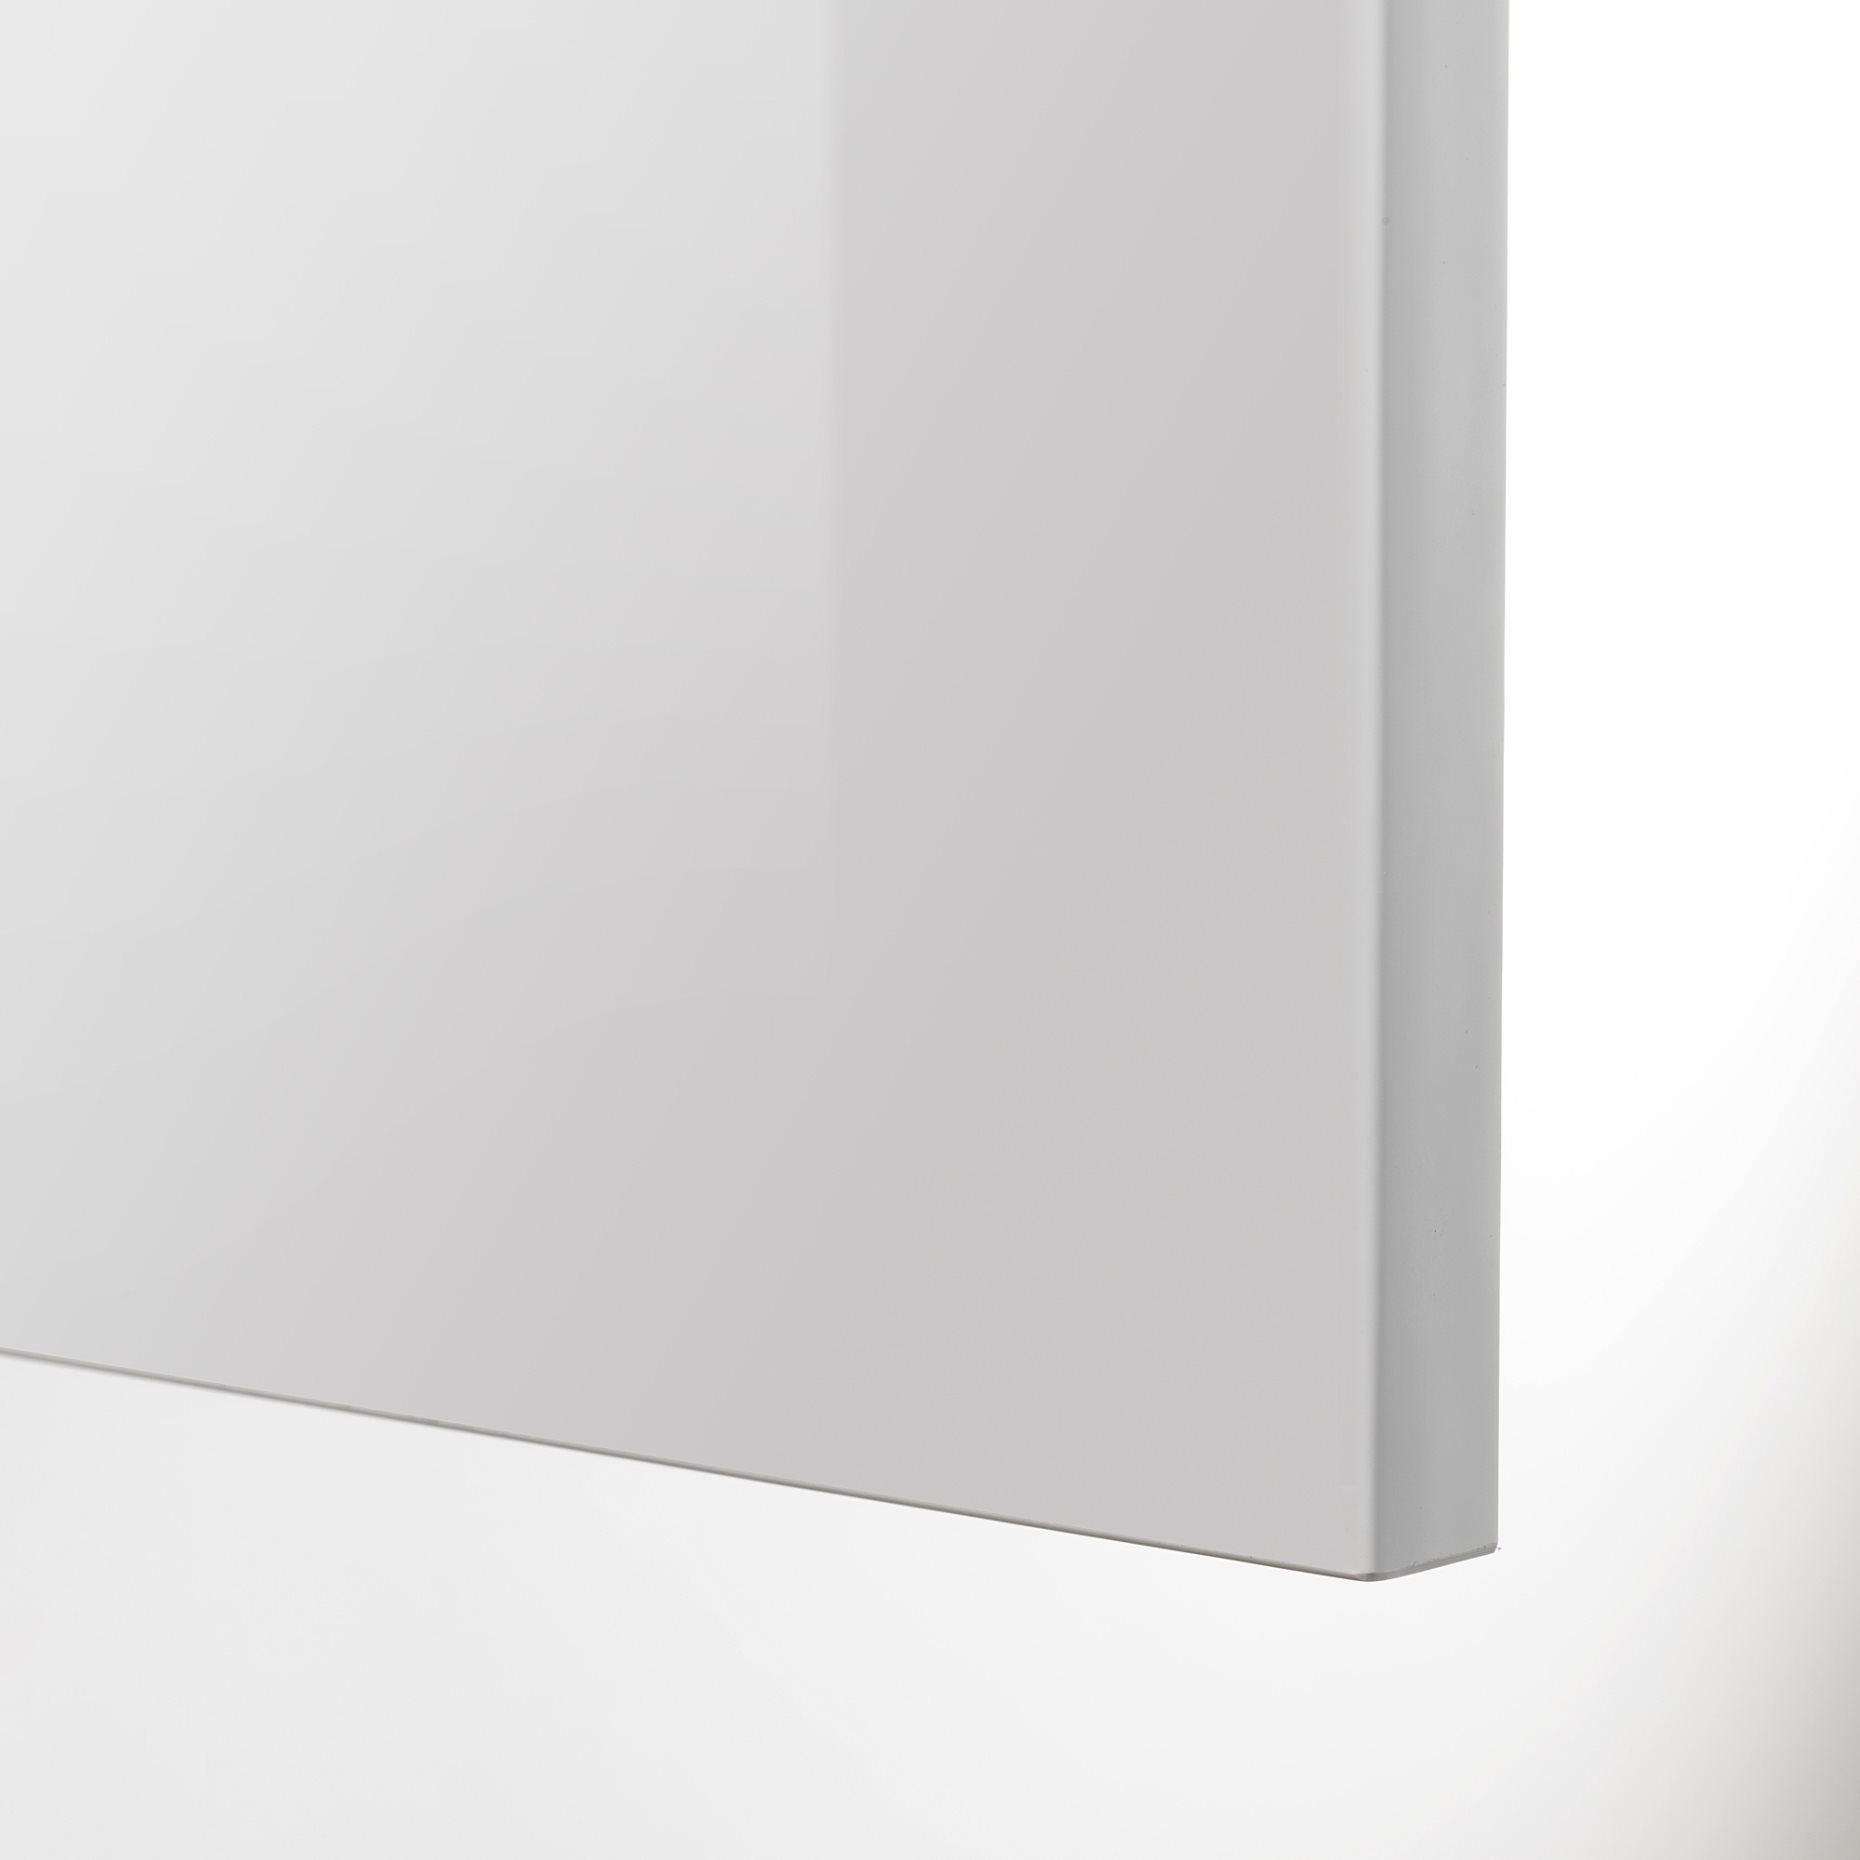 METOD, ντουλάπι βάσης με ράφια, 20x60 cm, 994.624.07